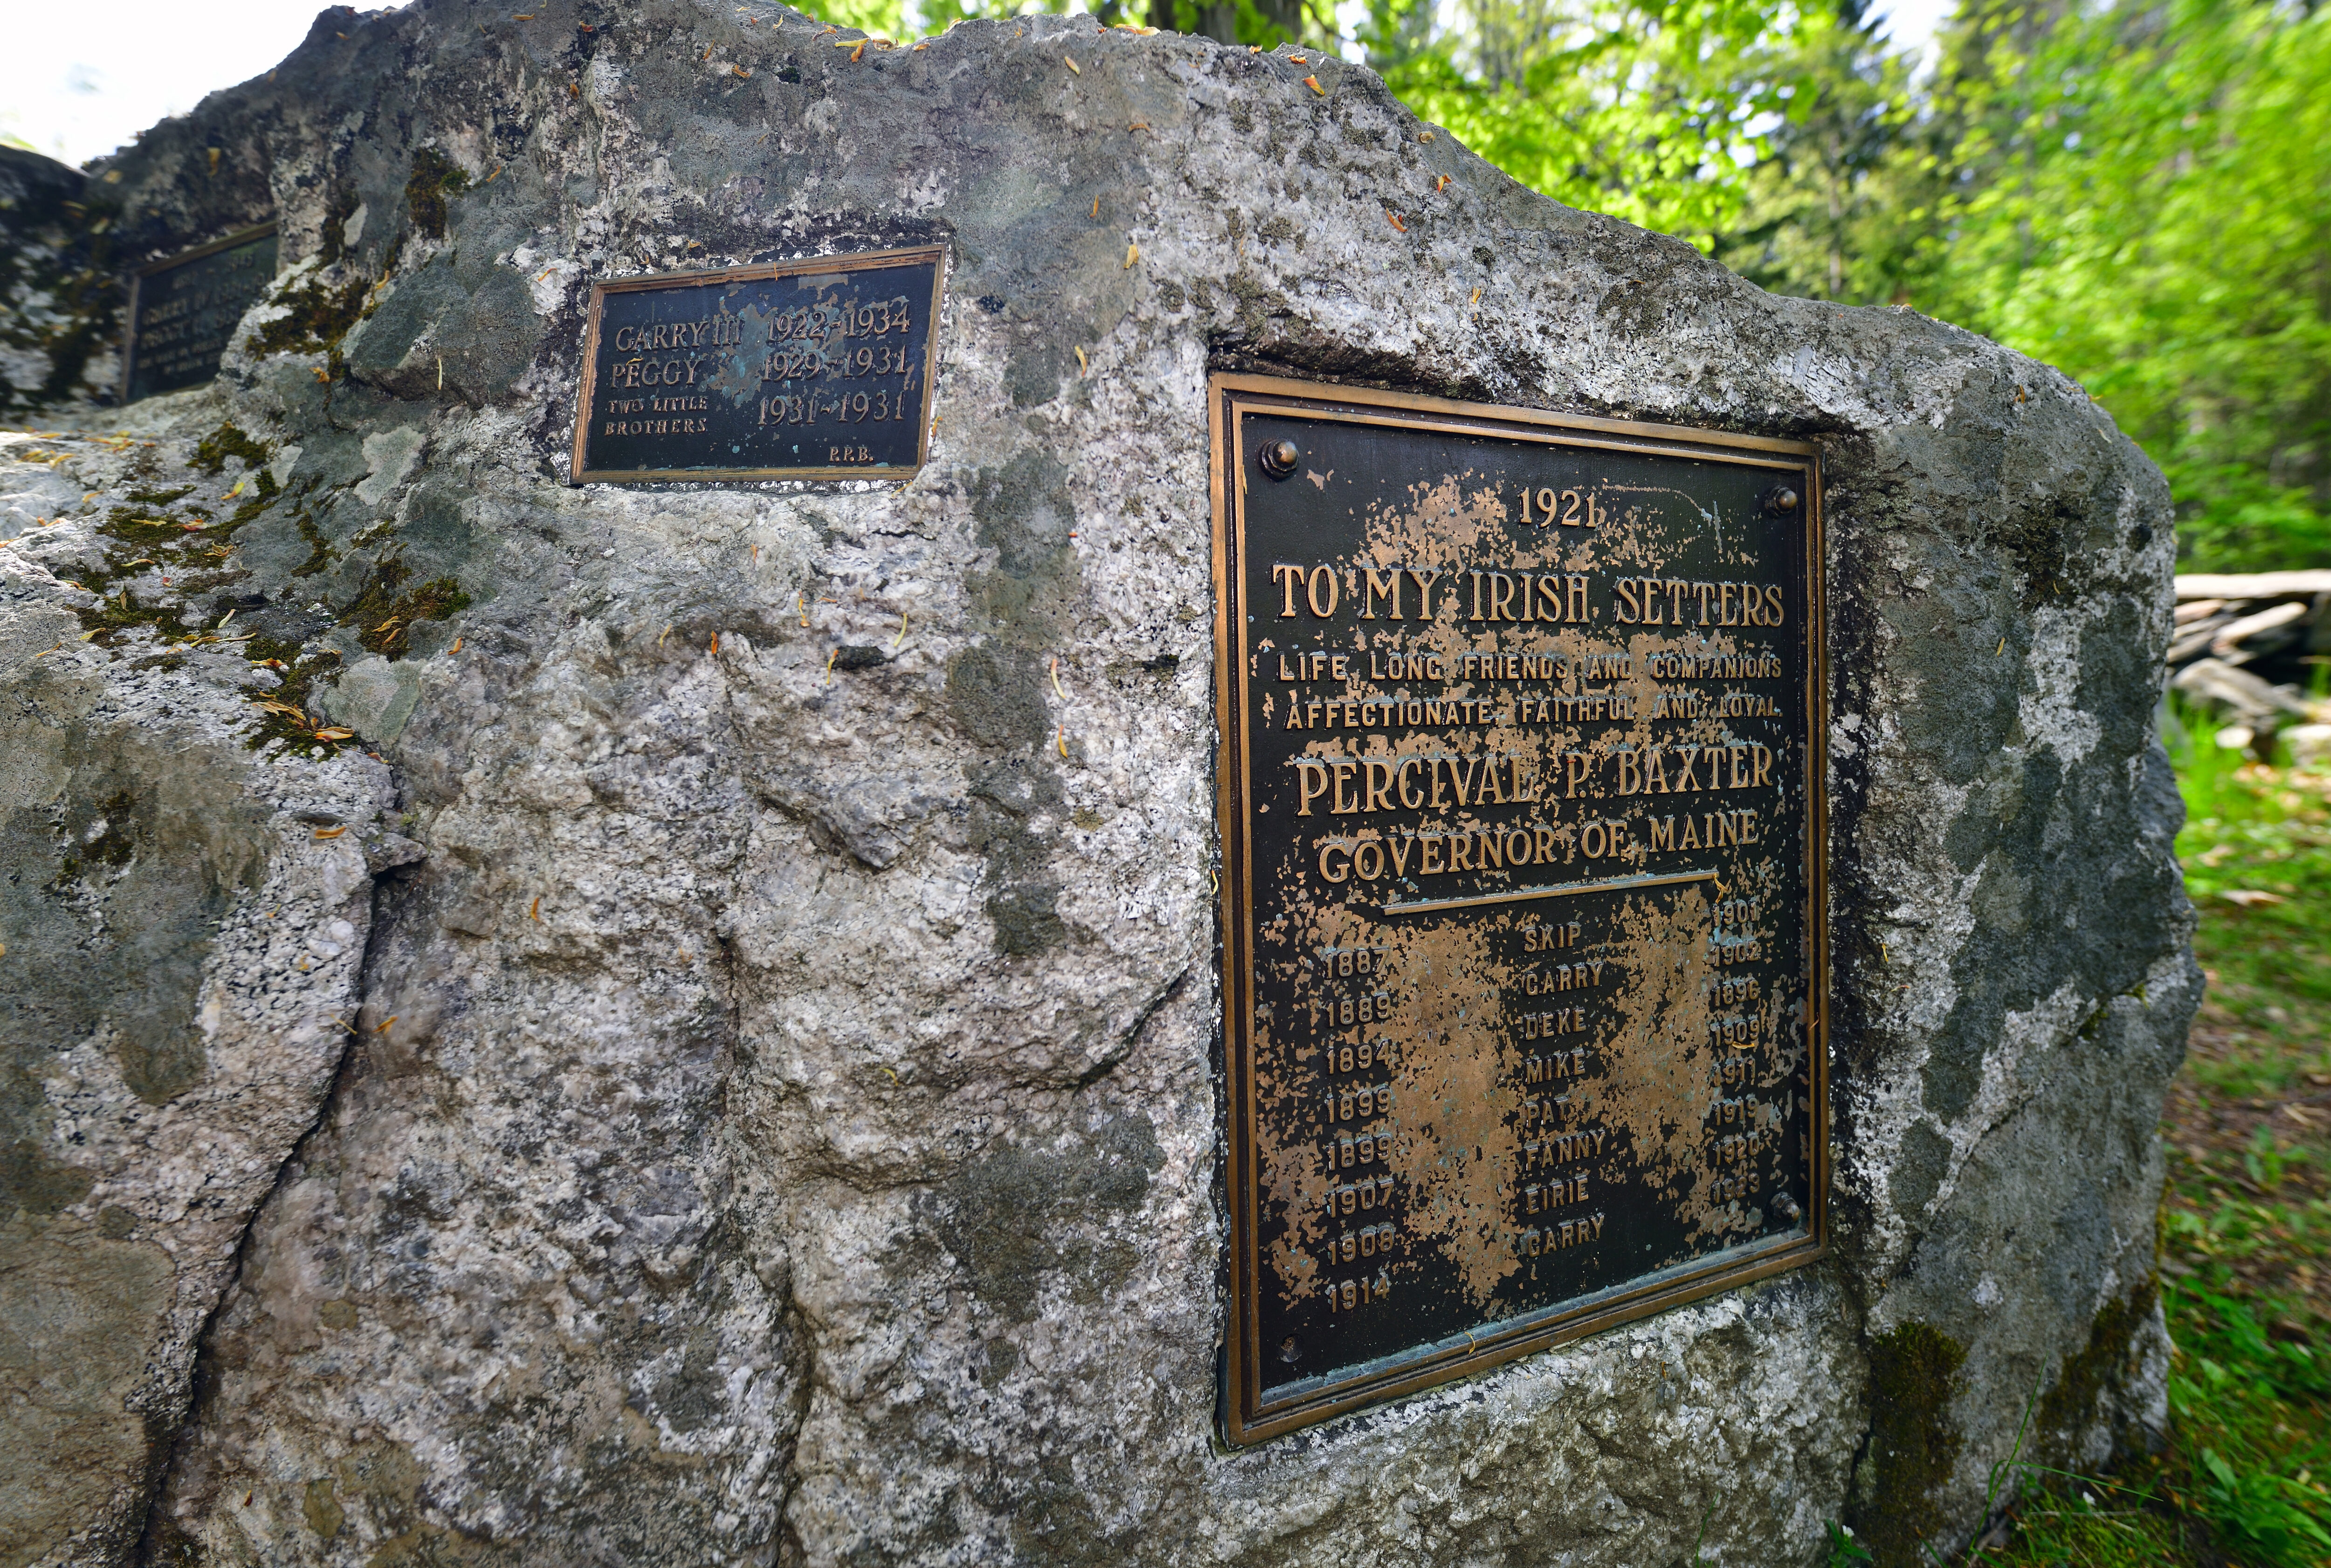 The stone memorial and bronze plaque